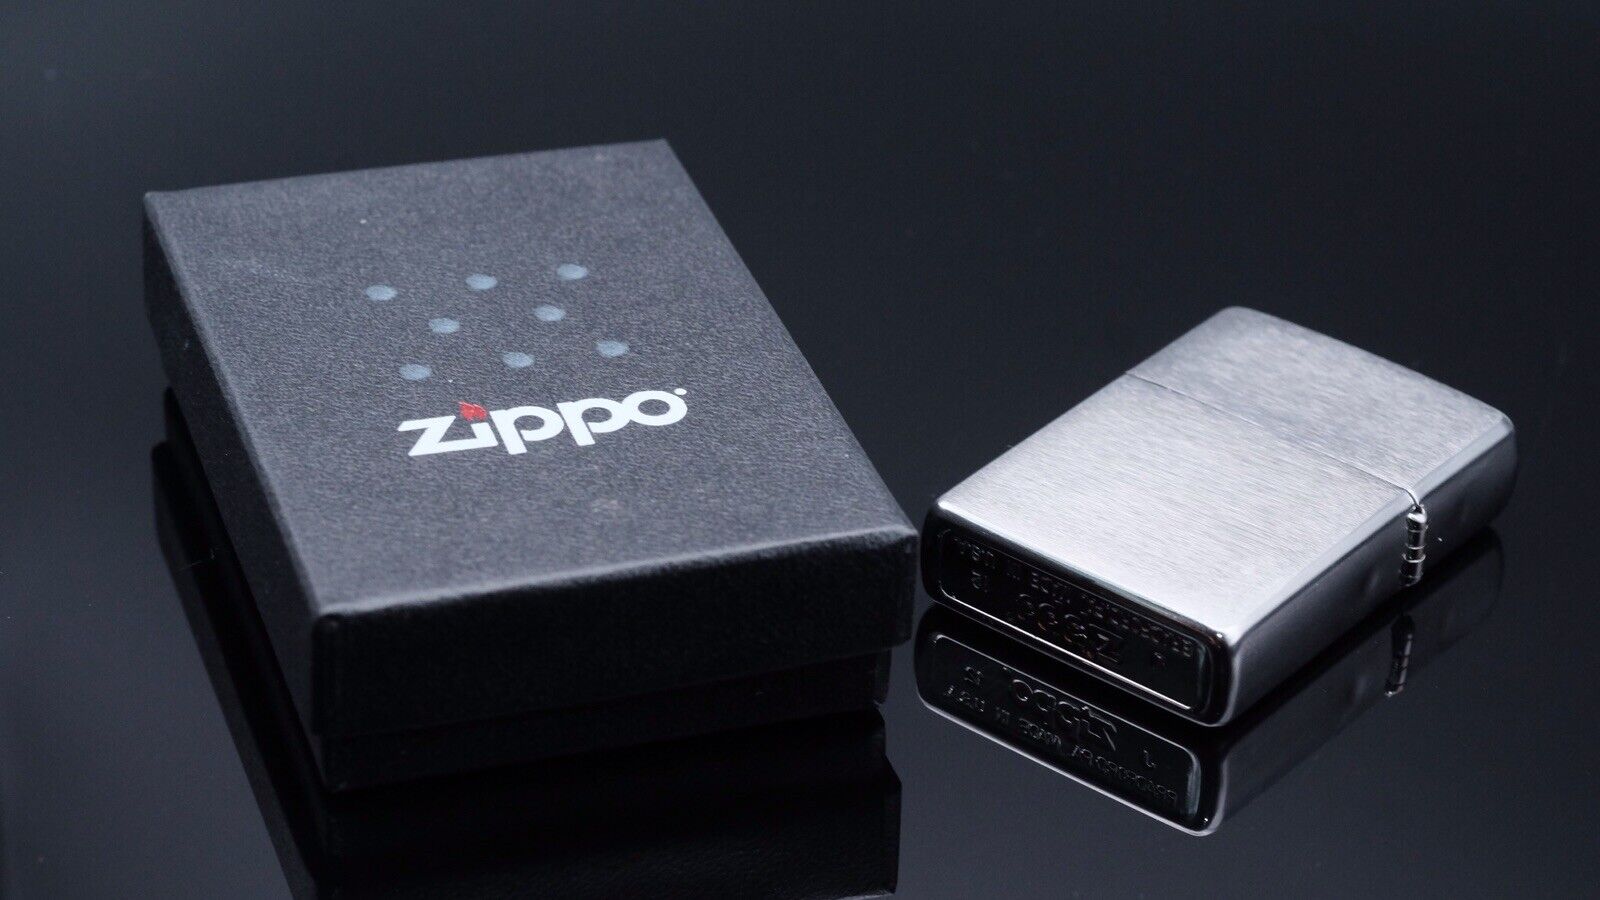 Zippo Shot Show Trade Show Lighter January 13 2015 Near New Condition